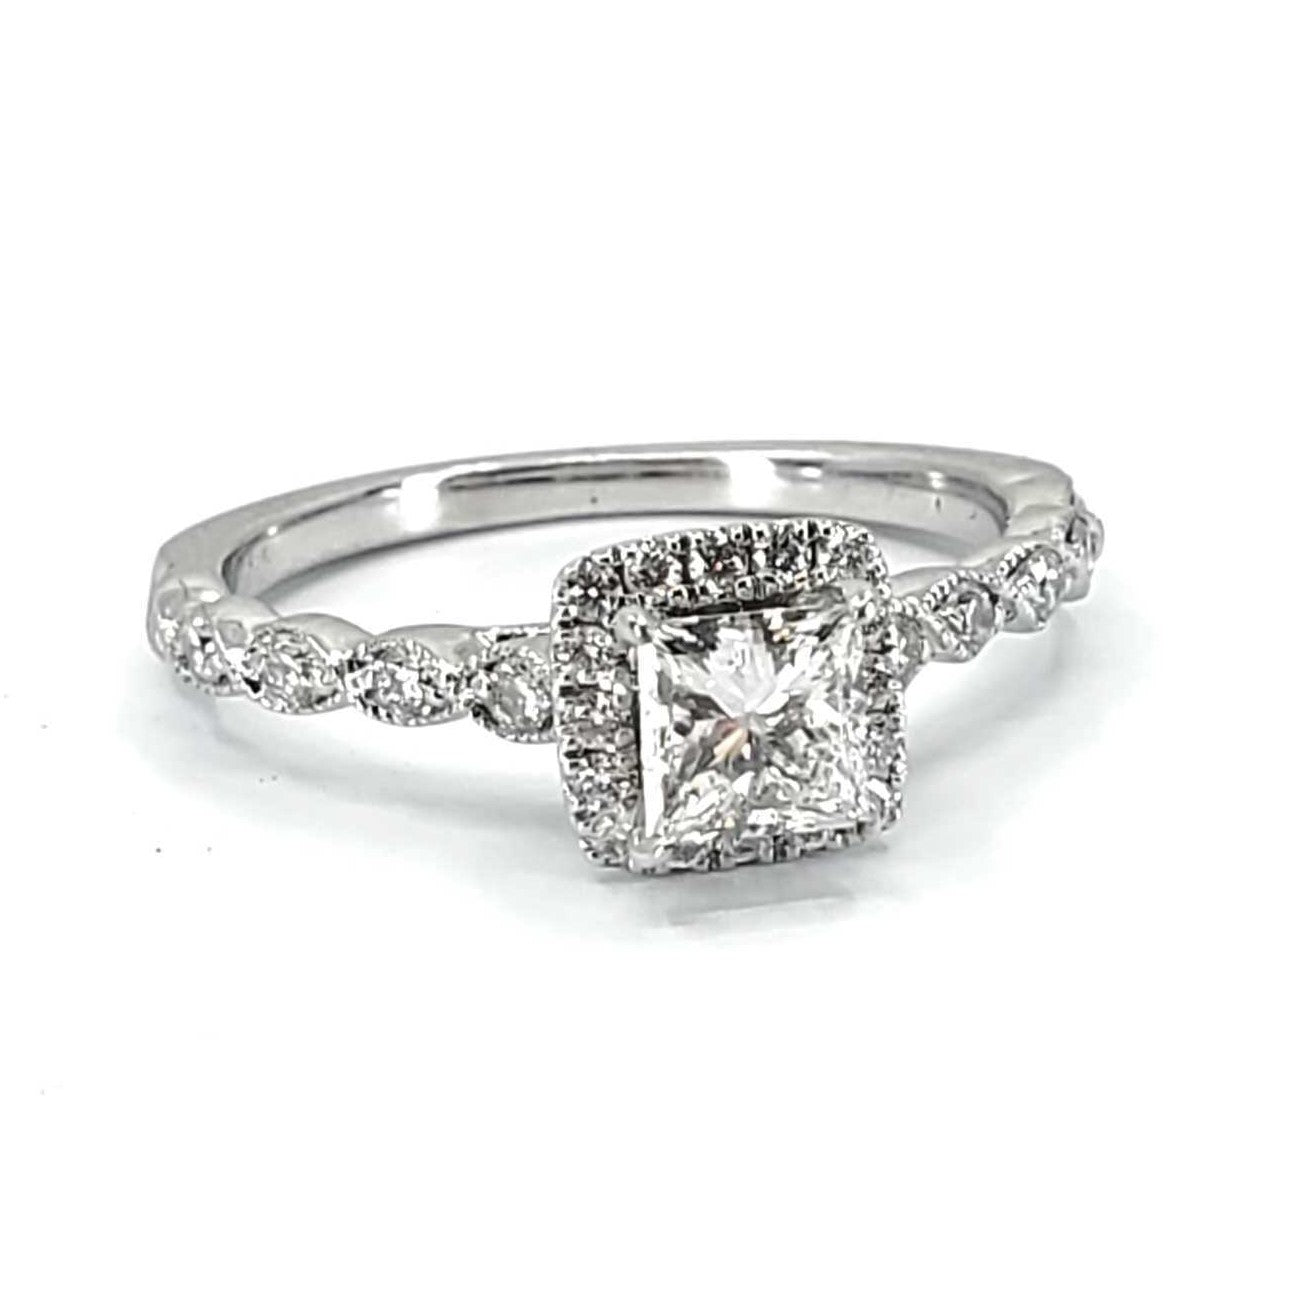 Vintage White Gold Halo Engagement Ring